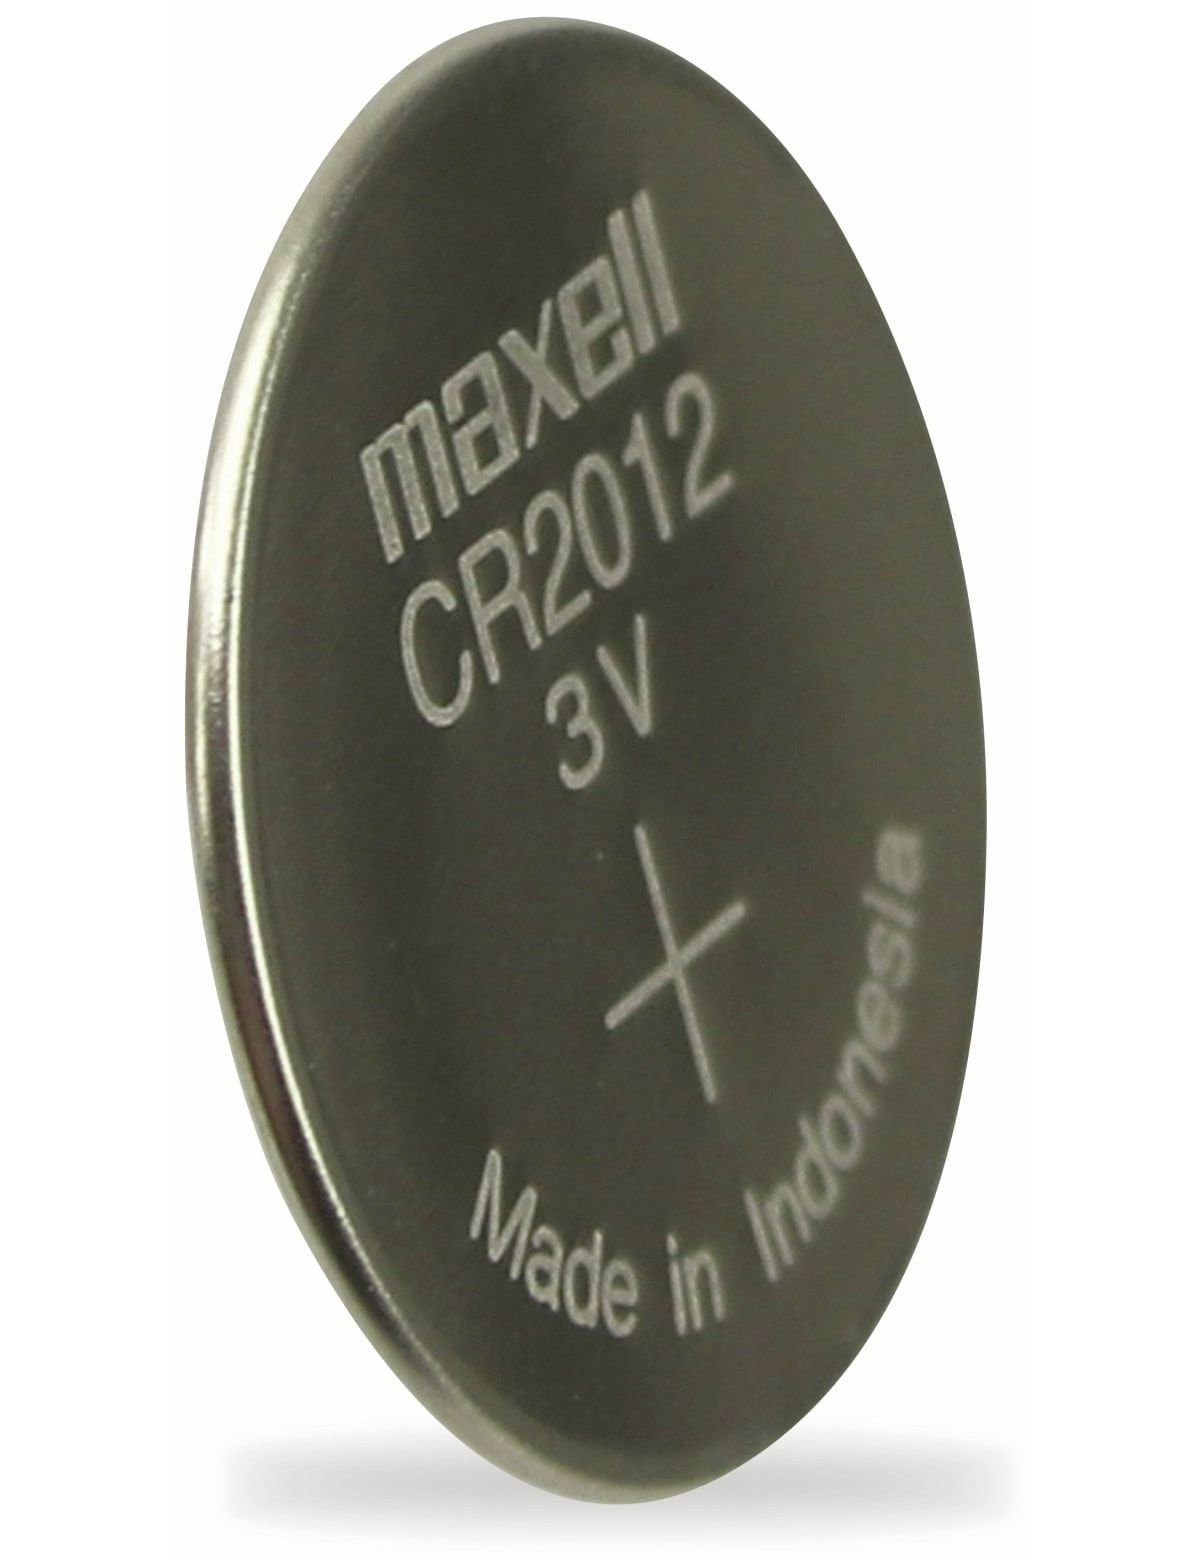 Maxell MAXELL Knopfzelle CR2012, Lithium, 50 1 3 Knopfzelle mAh, V